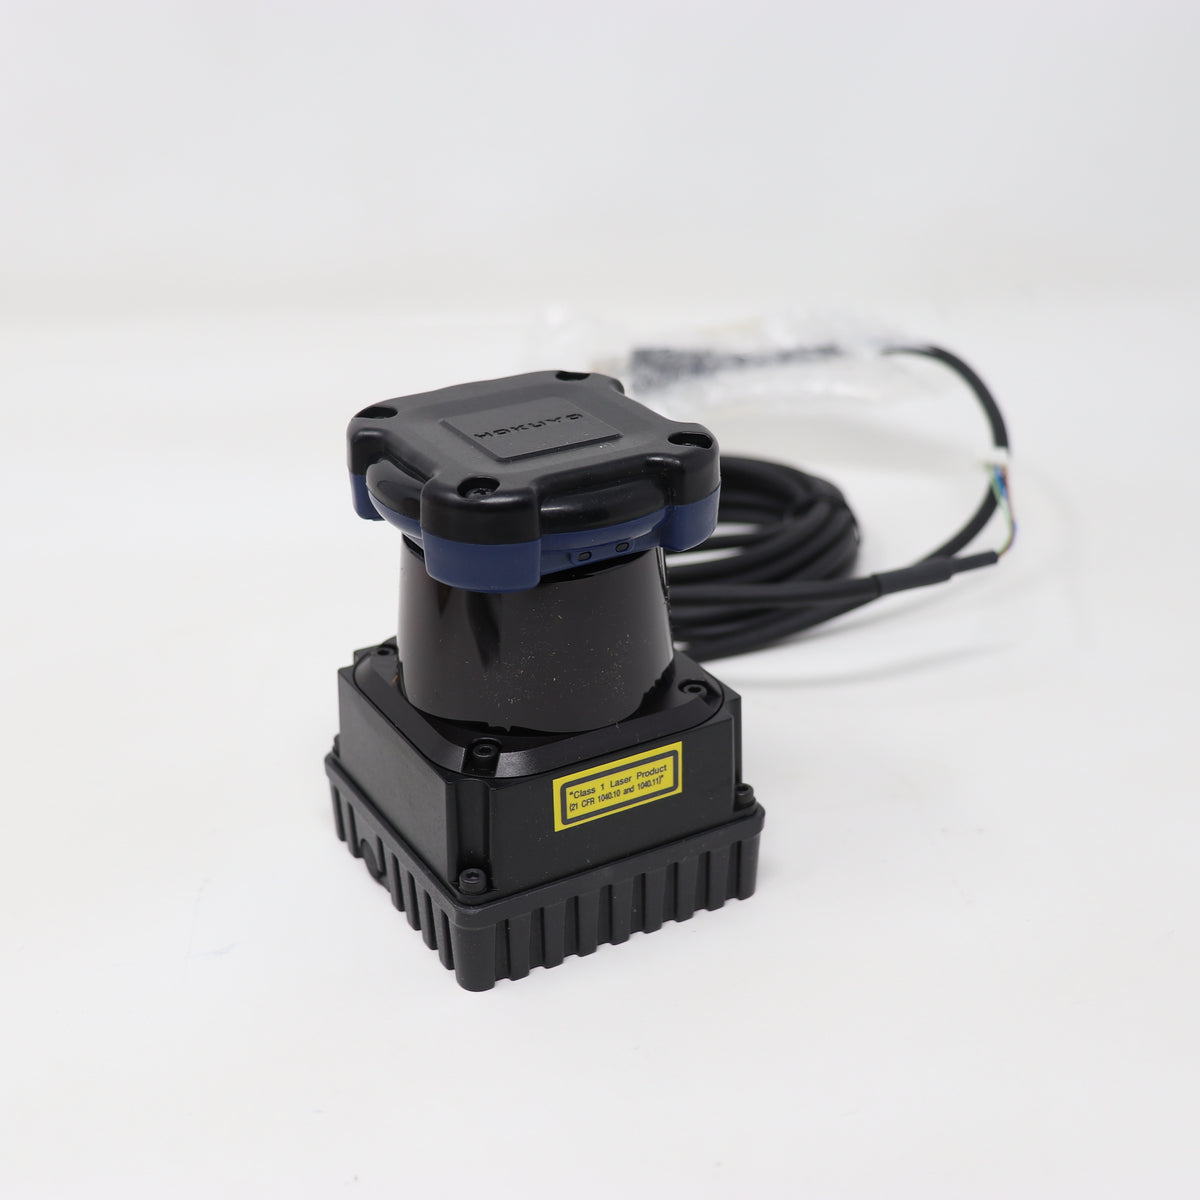 Hokuyo 2D LiDar Sensor Scanning Laser UTM-30LX-EW UUTM013